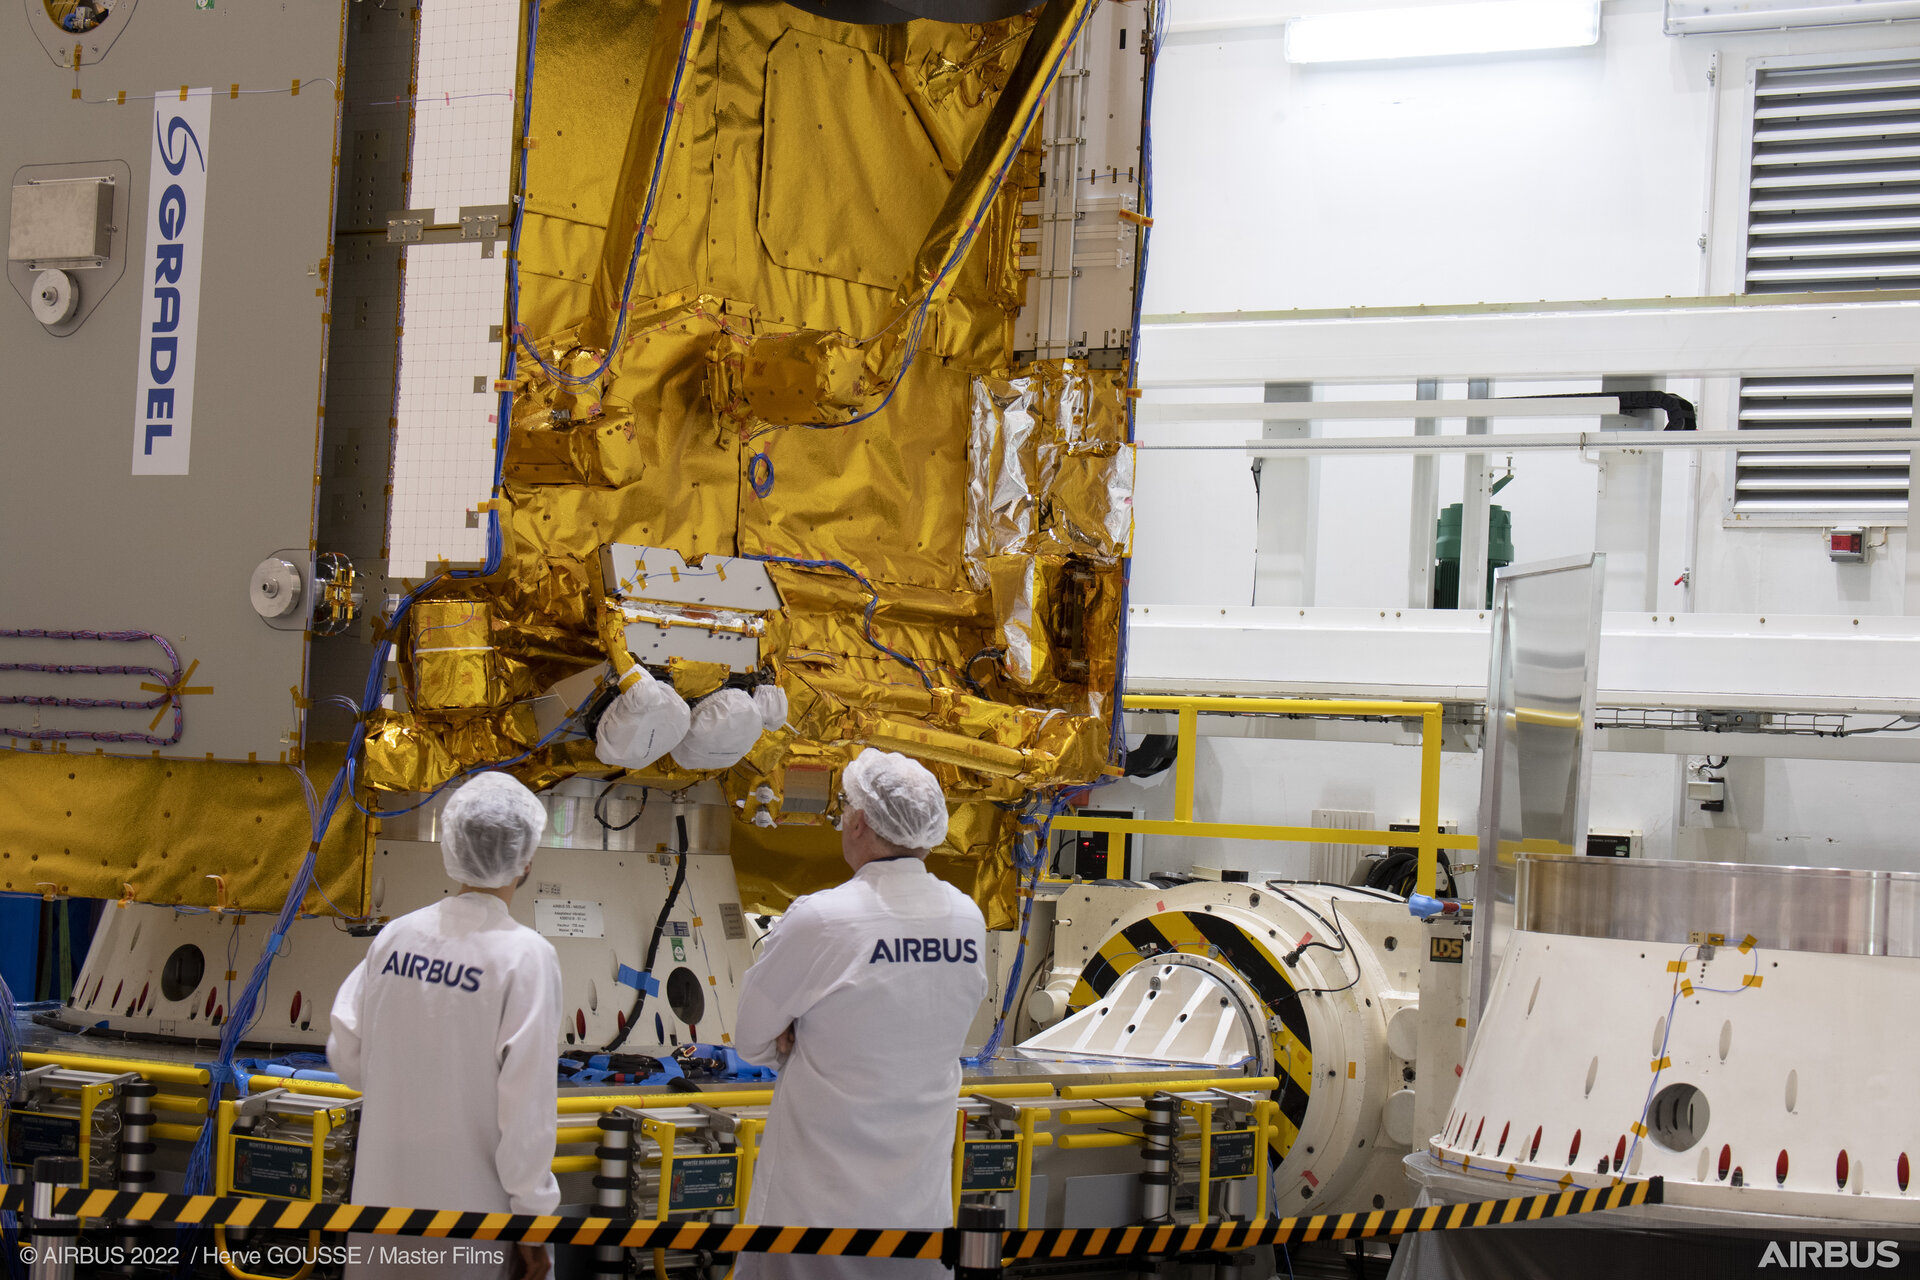 Eutelsat Hotbird 13G telecommunications satellite in the mechanical test facility